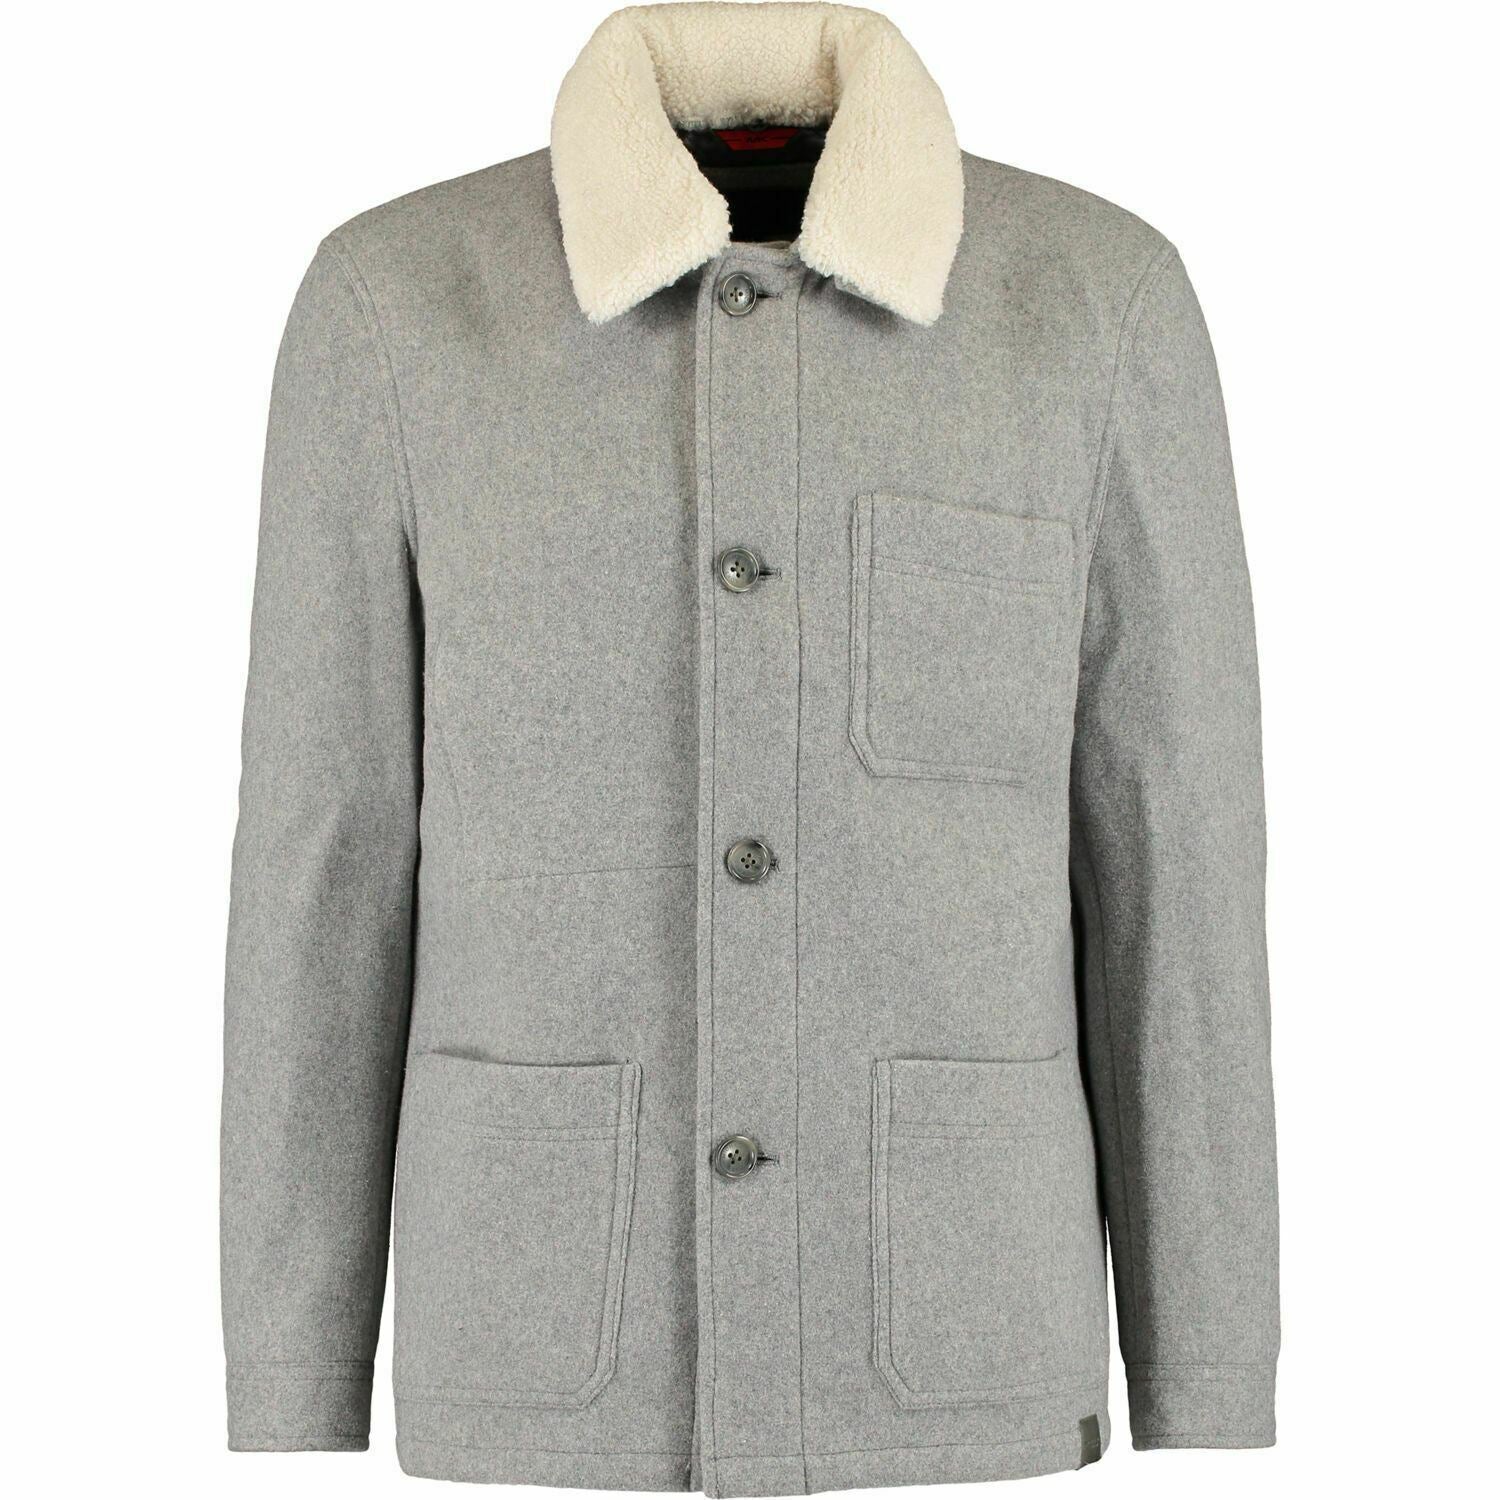 MICHAEL KORS Men's Wool Blend & Faux Shearling Collar Jacket Coat, Grey, size M